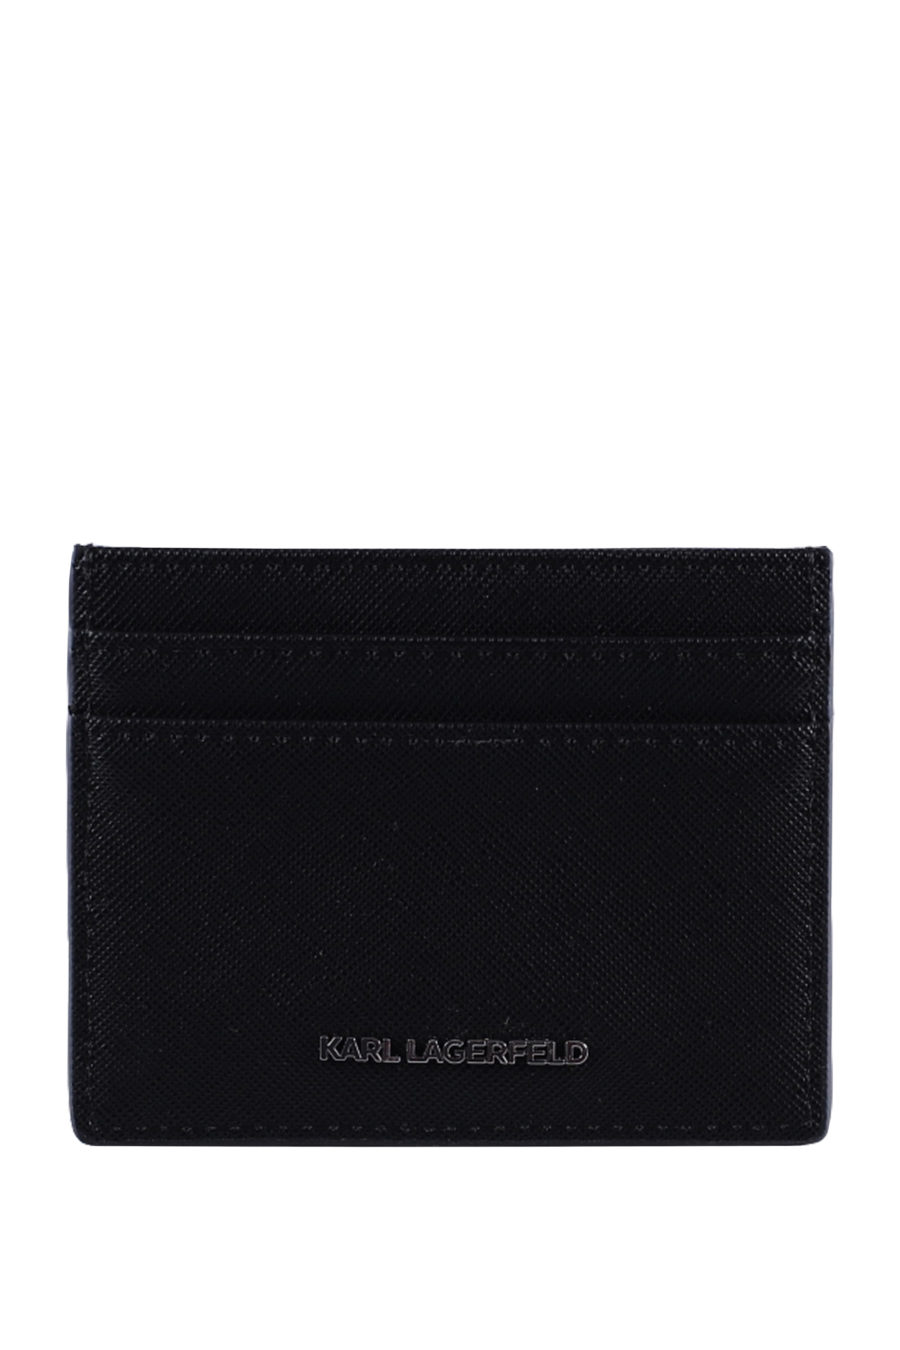 Porte-cartes noir avec logo "Karl" - IMG 0023